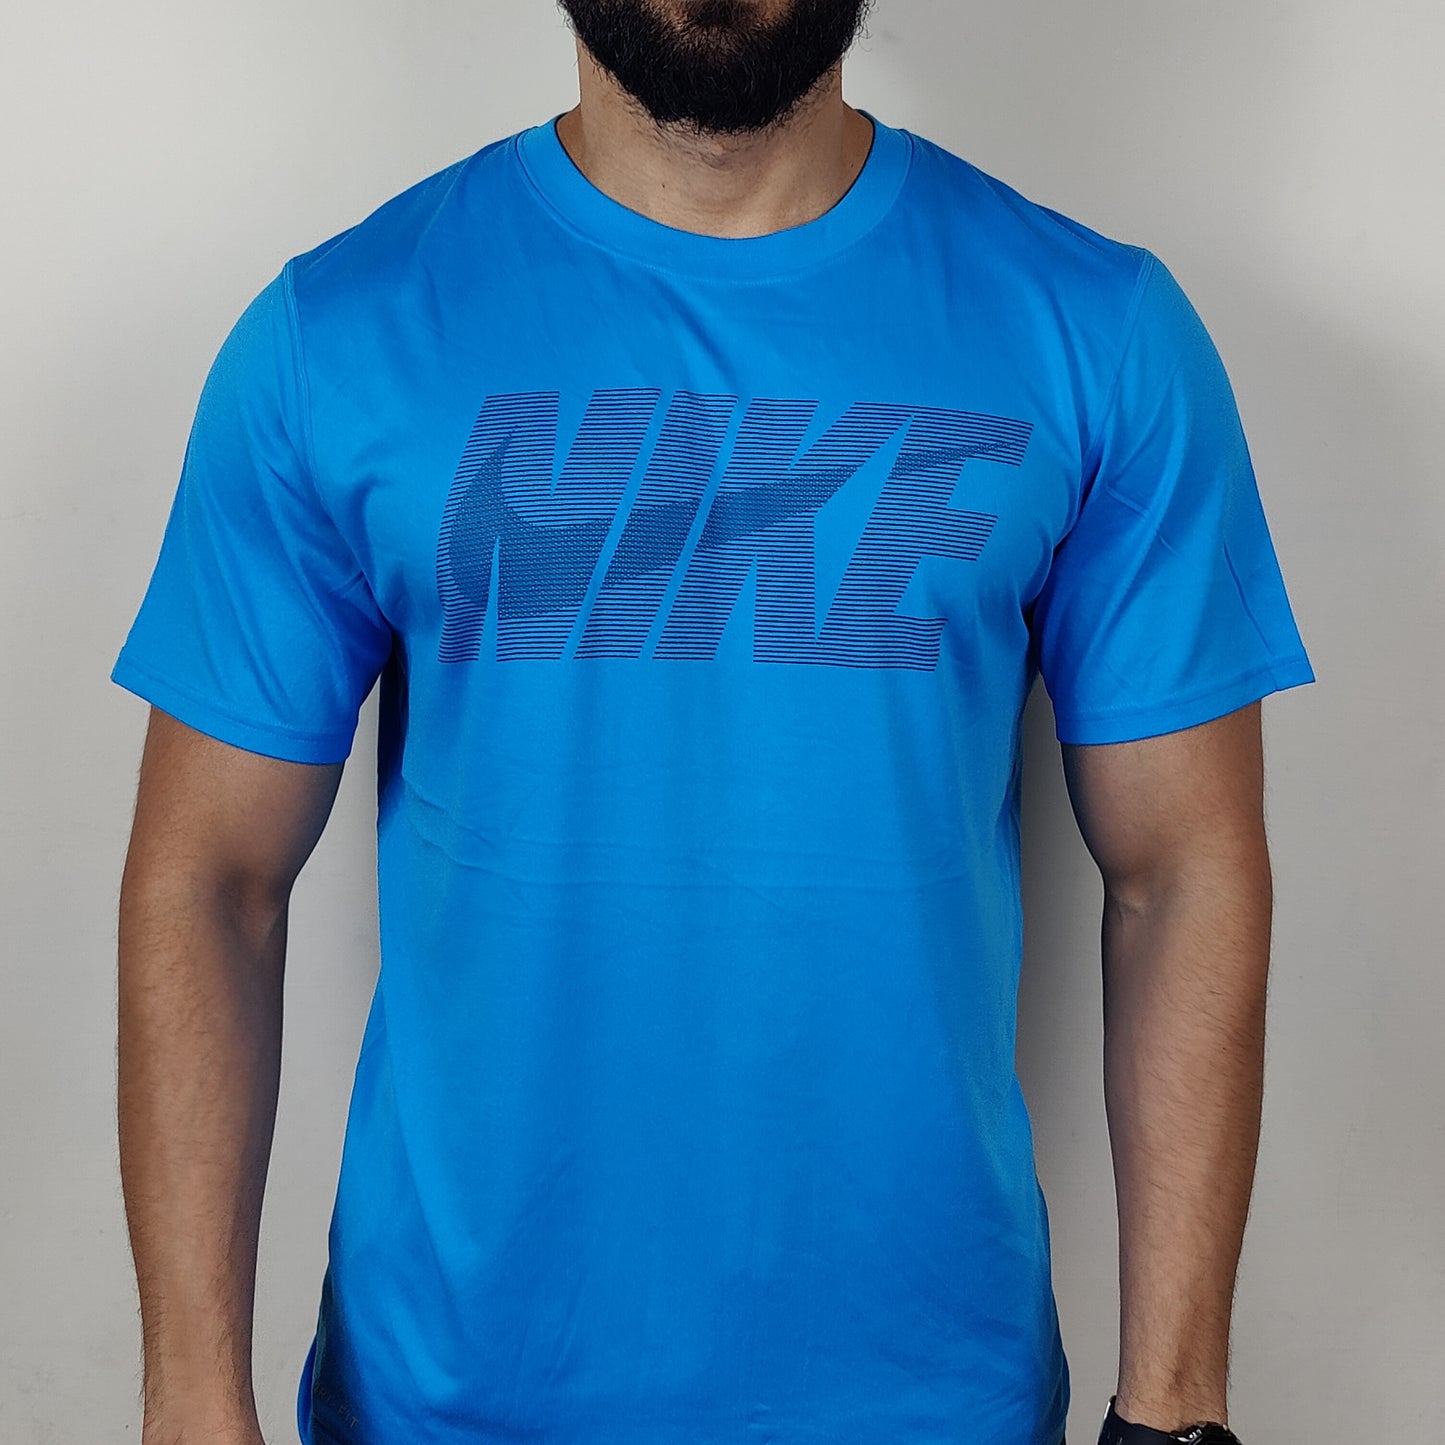 Nike DriFit - Blue